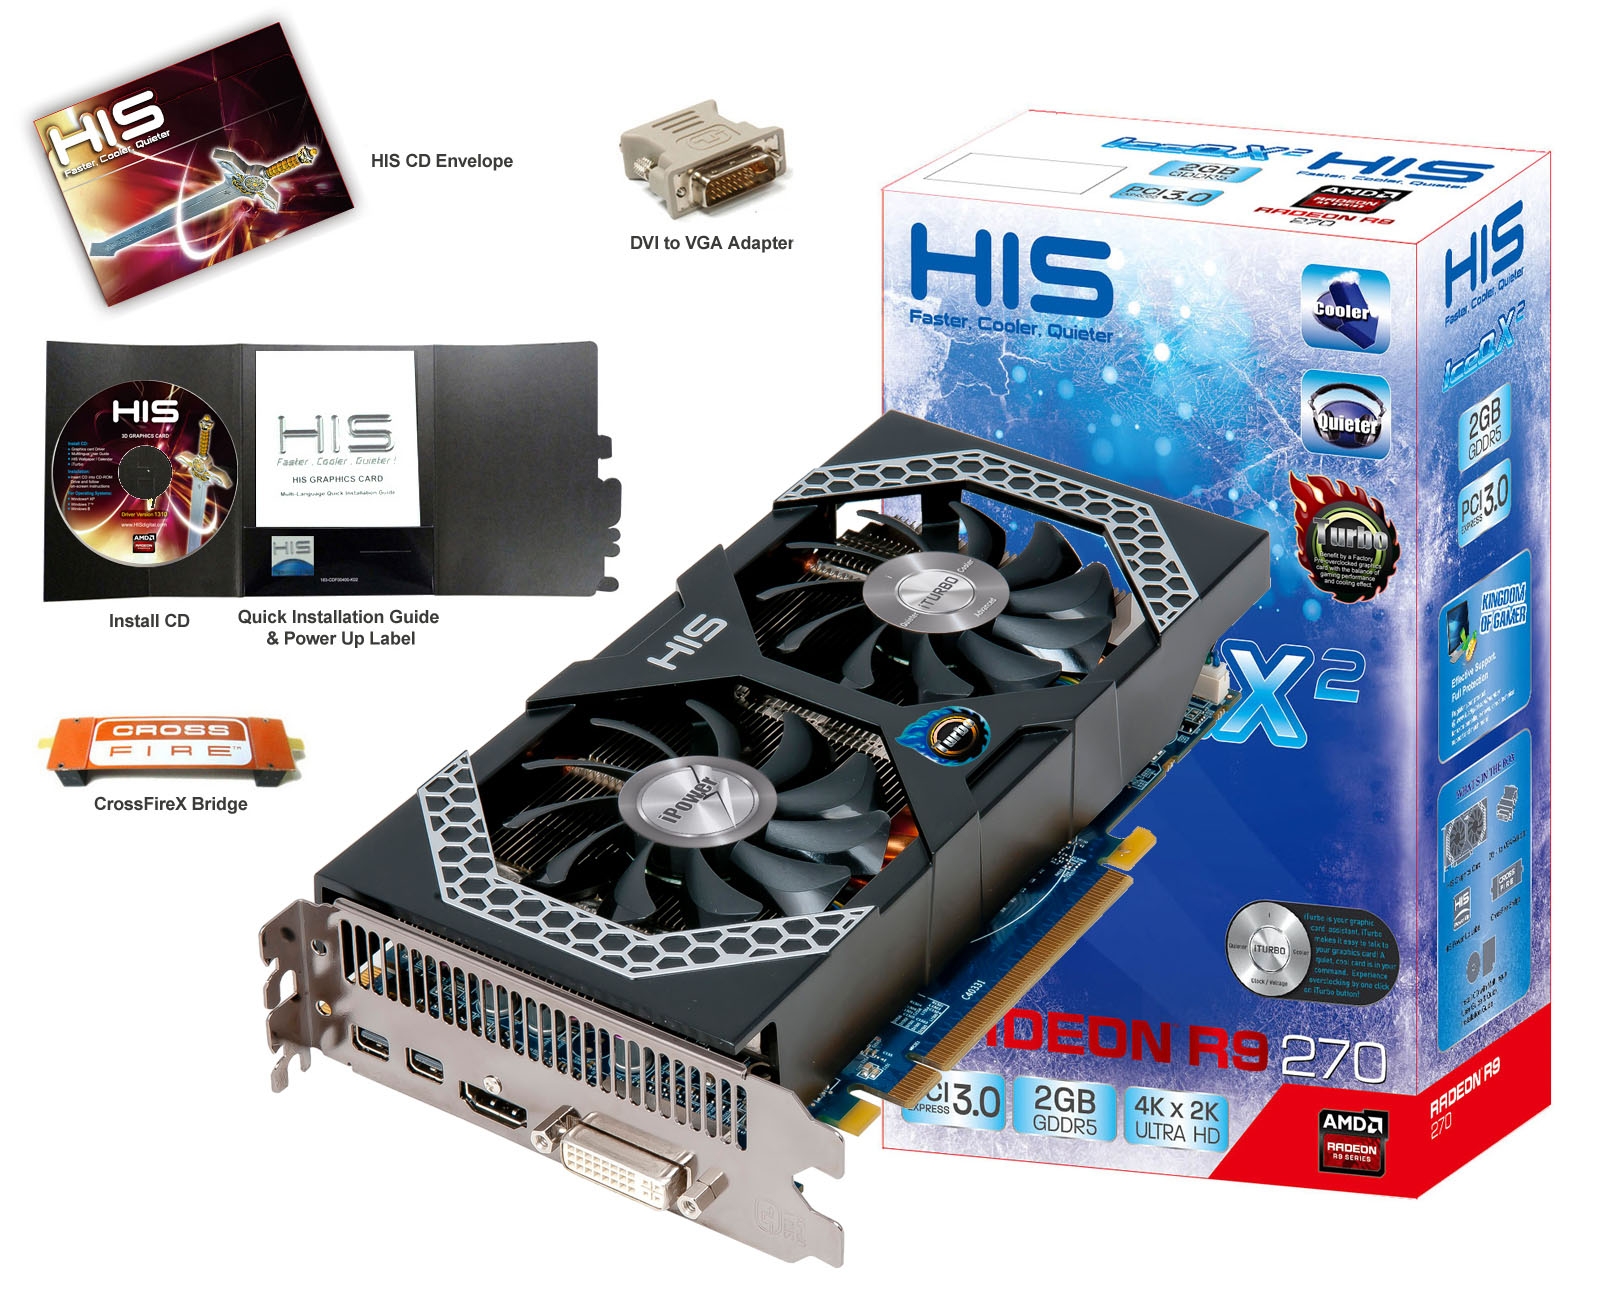 1 cặp HIS IceQ X2 RADEON R9 270 2Gb/DDR5/256Bit PCI 3.0 Fullbox bh 1/2017